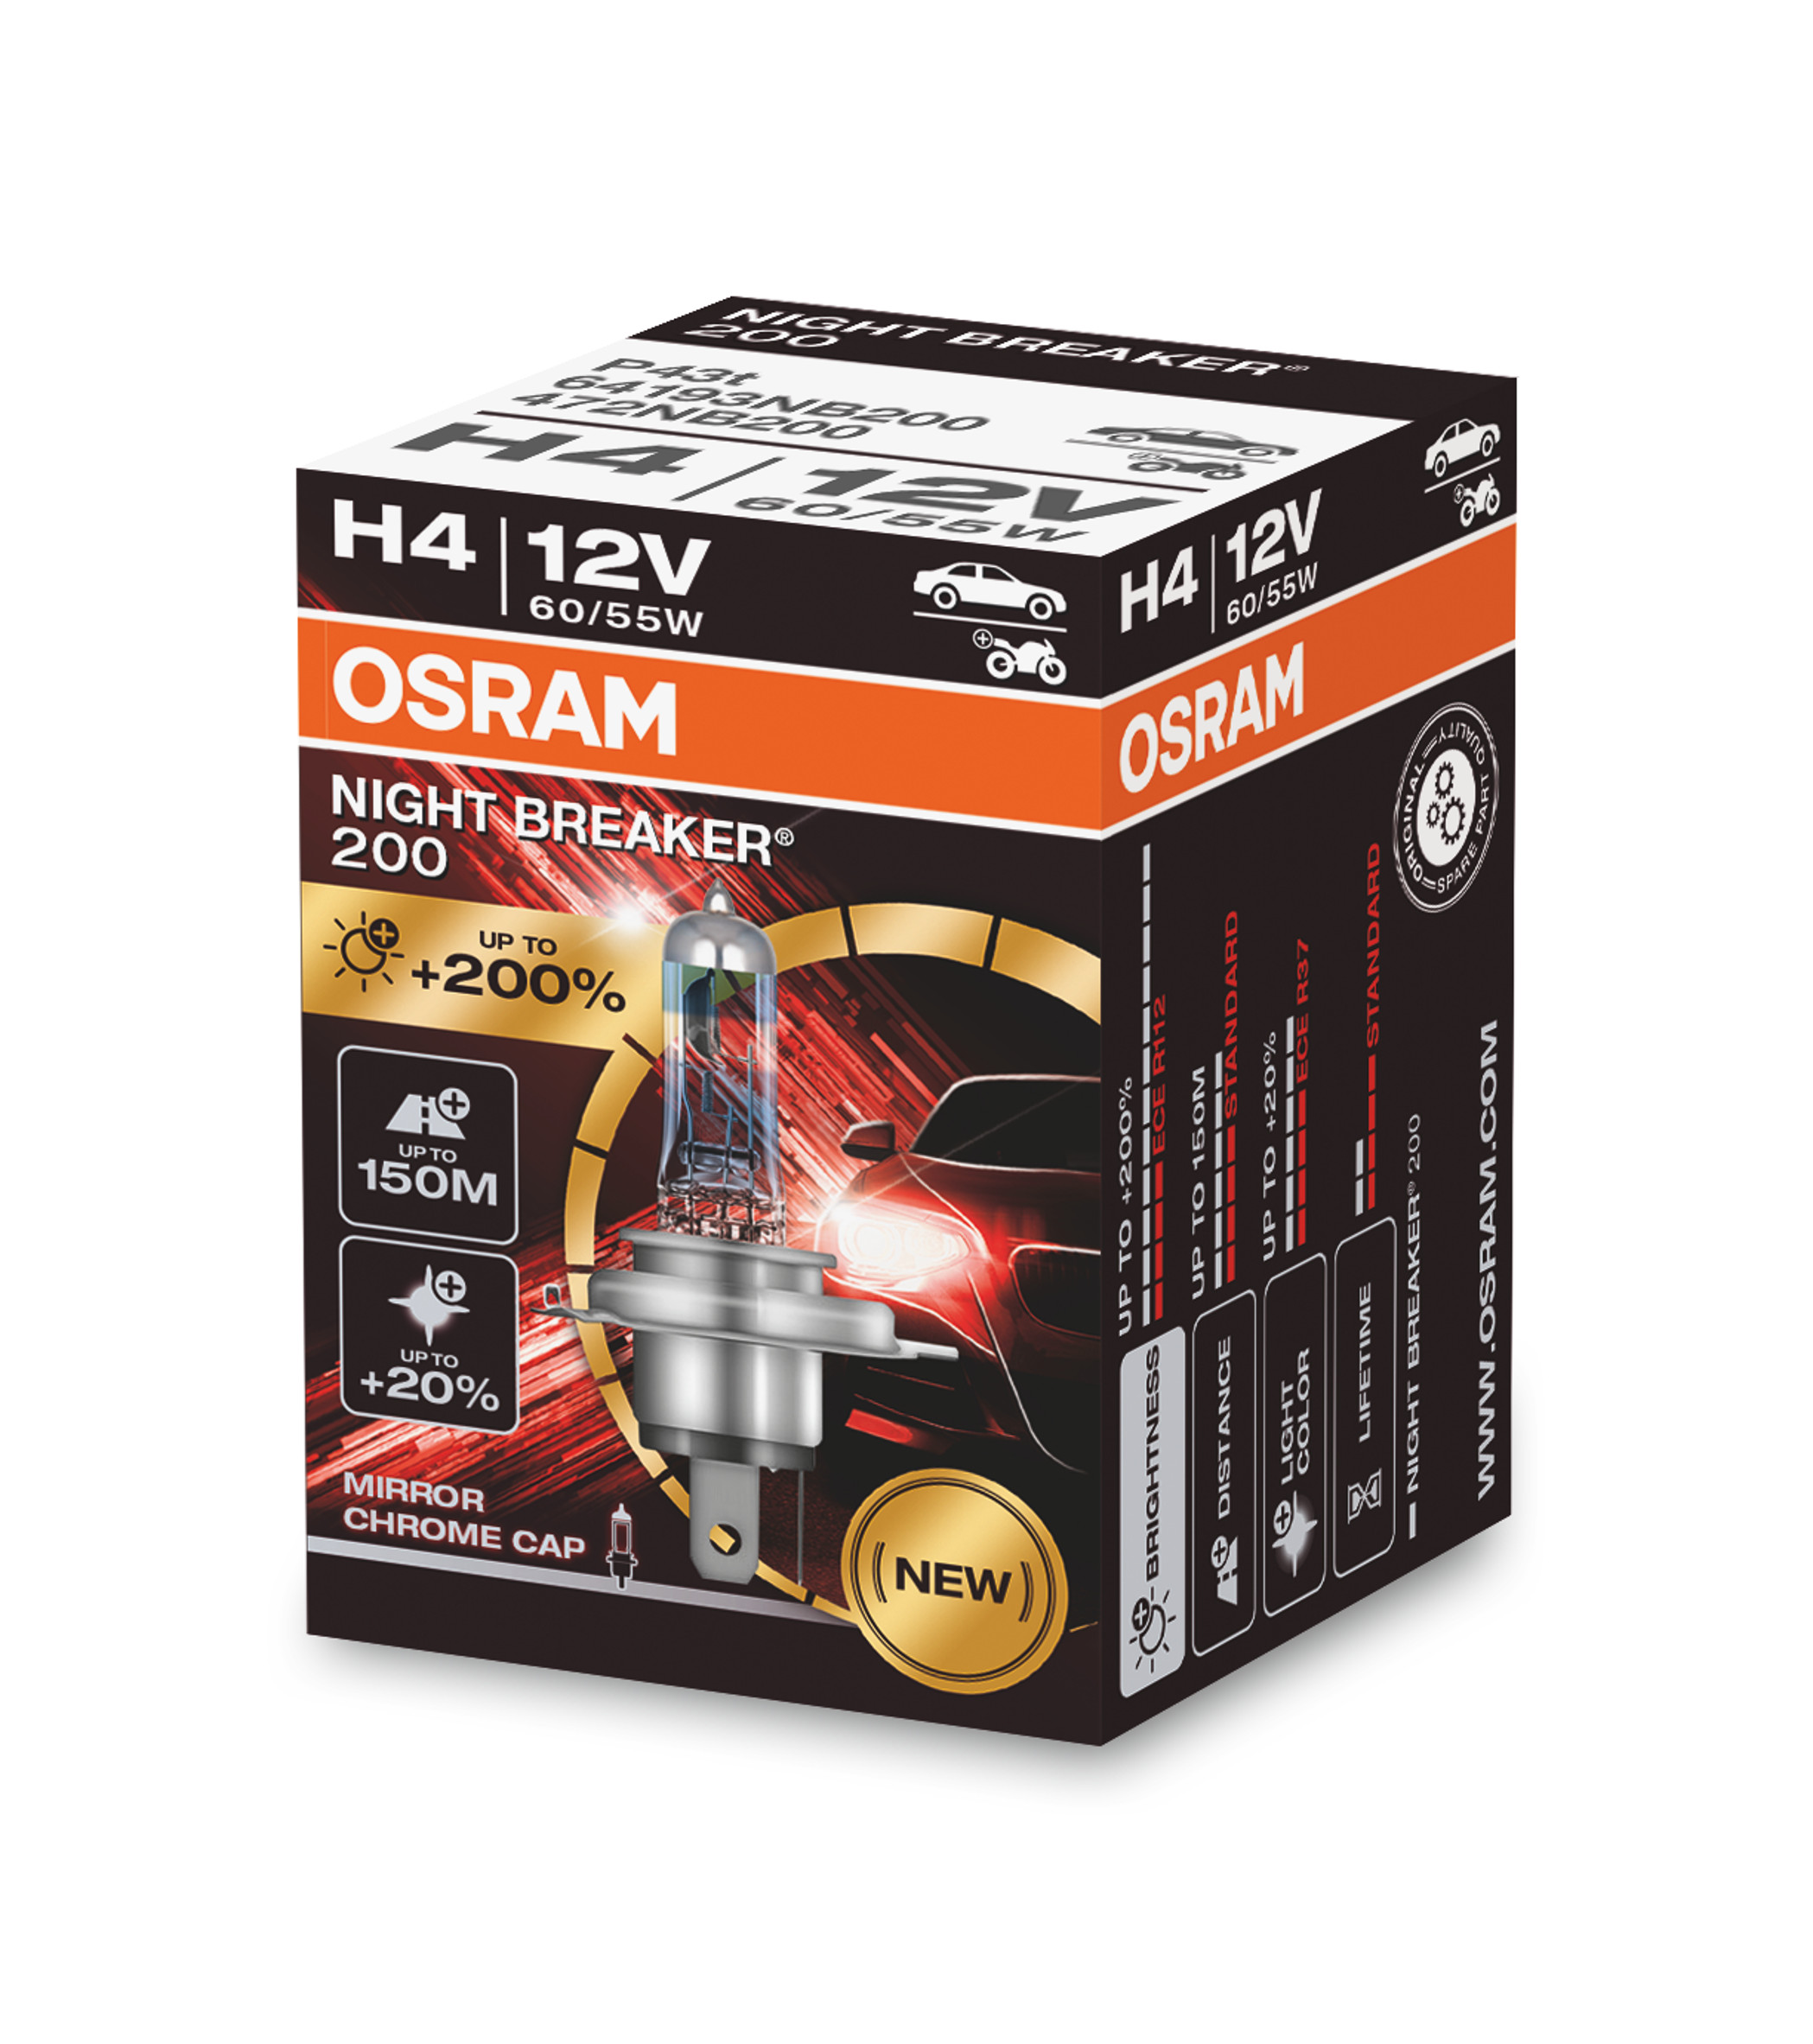 H4 12V 60/55W P43t NIGHT BREAKER® 200 +200% 1St. OSRAM